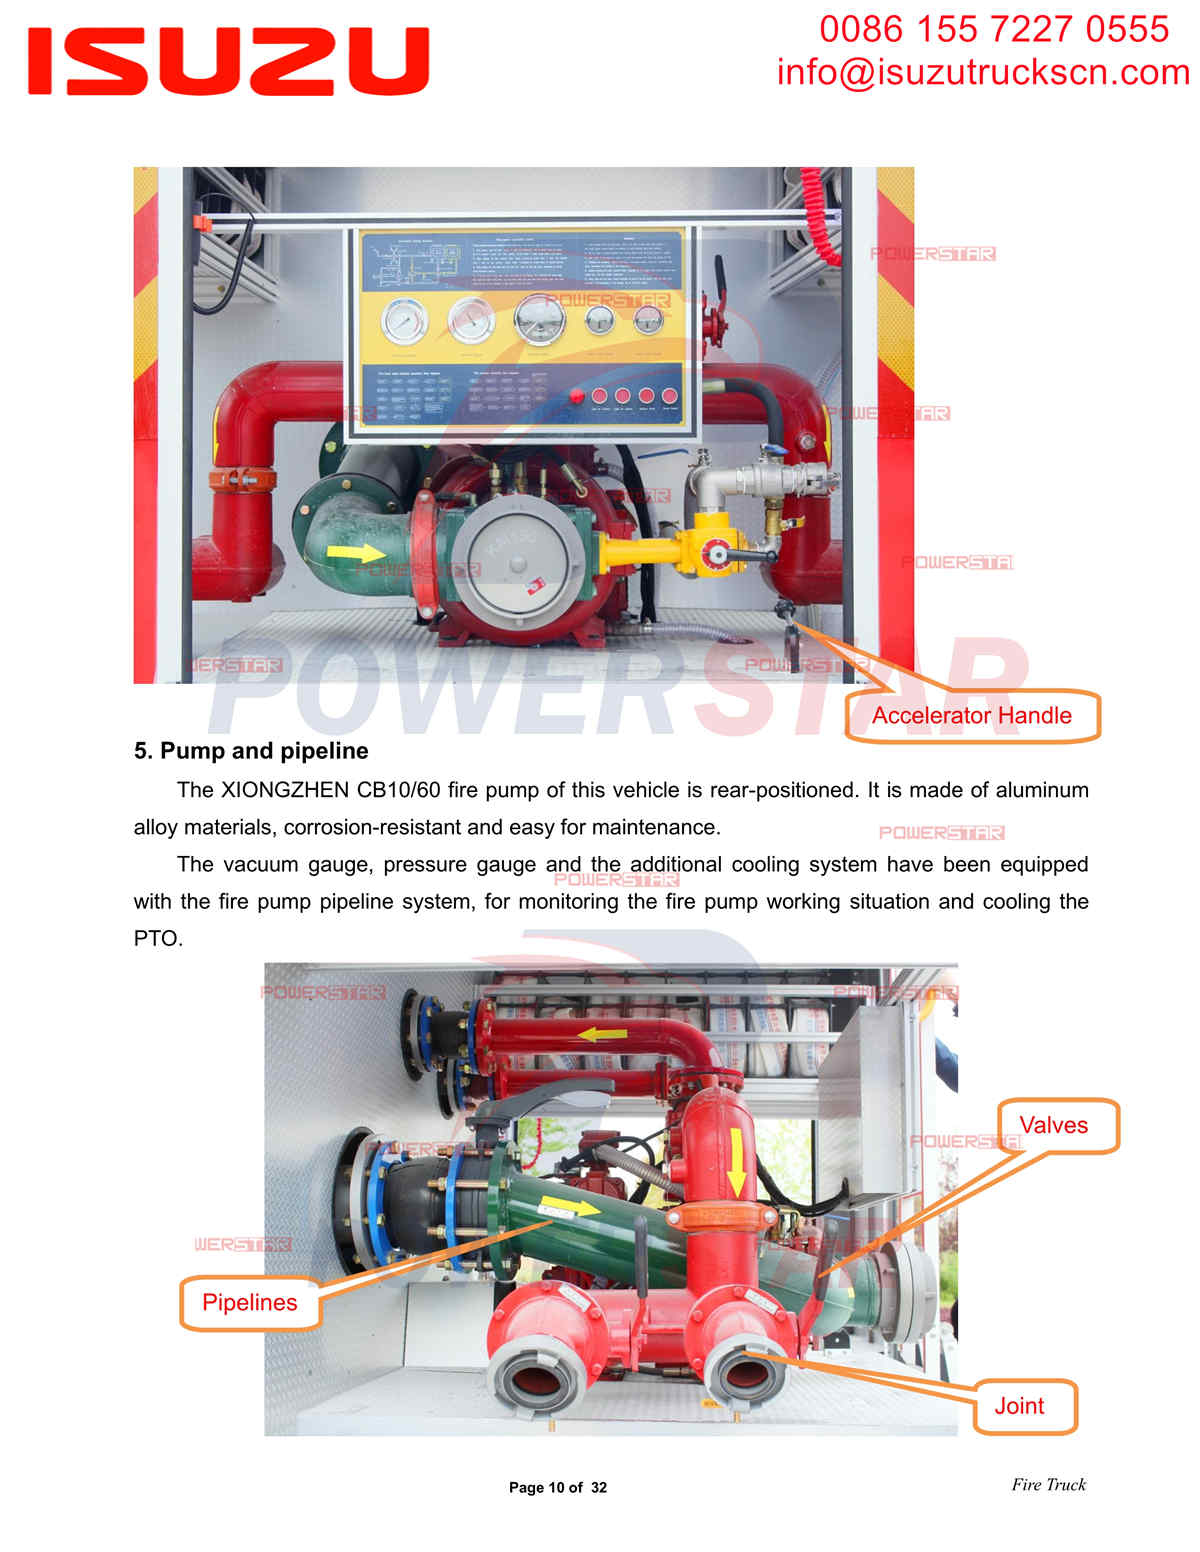 POWERSTAR ISUZU FVZ Camion de pompier export Afrique